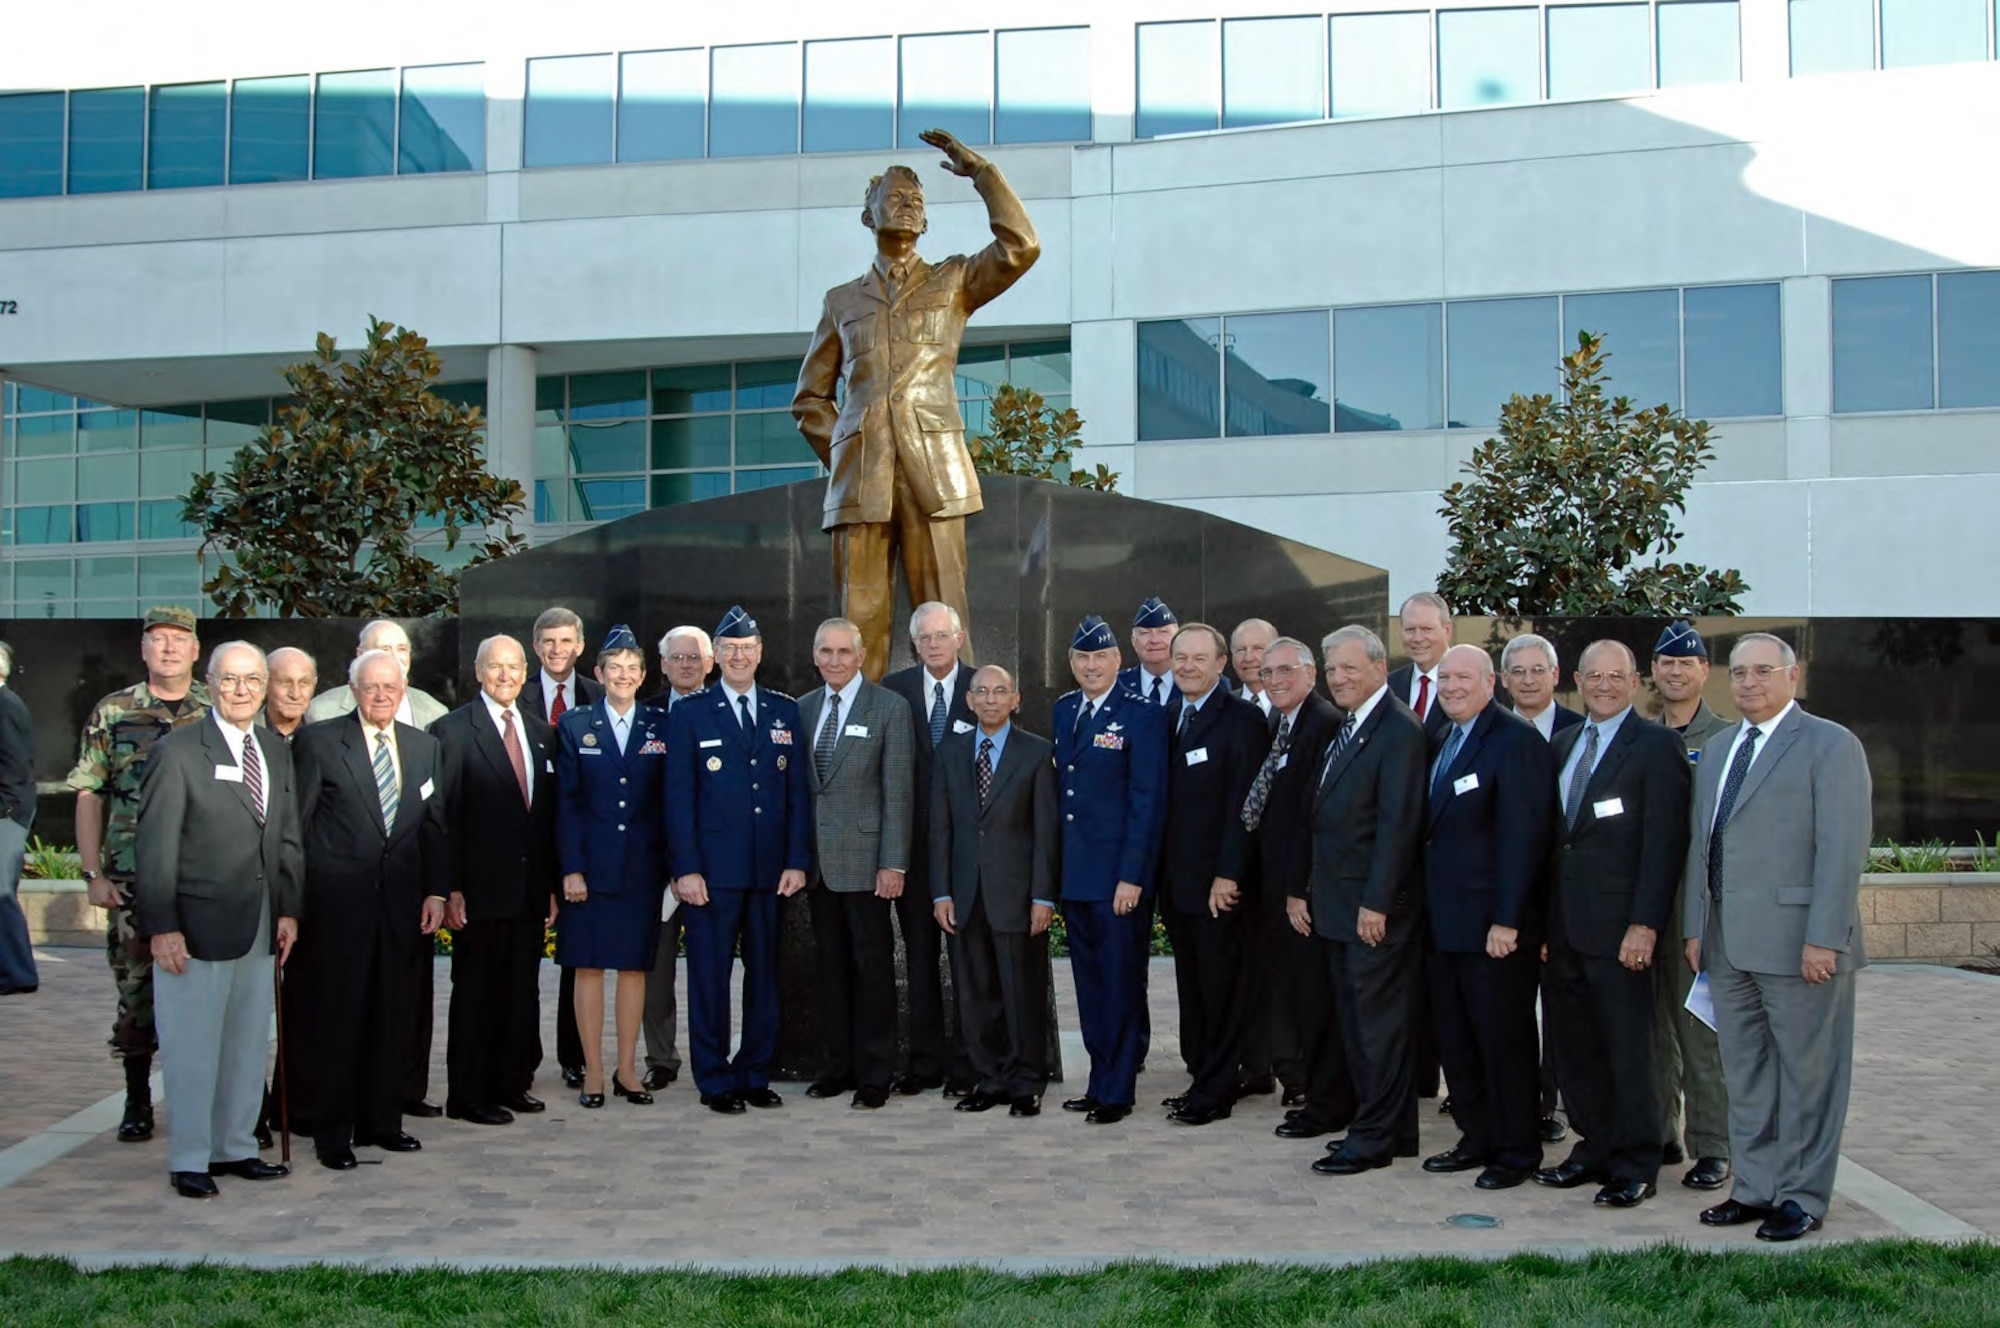 A galaxy of stars, current and past, stand in front of the Schriever Memorial and Wall of Honor after a dedication ceremony Nov. 15, 2007. Included in this group portrait, left to right: Brig. Gen. Bradley, Maj. Gen. Cooper, Brig. Gen. King, Lt. Gen. Henry,Ukn, Maj. Gen. Funk, Maj. Gen. Sega, Lt. Gen. Pawlikowski, Maj. Gen. Tourino, Gen. Kehler, Gen. Kutyna, Lt. Gen. Barry, Gen. Randolph, Lt. Gen. Hamel, Maj. Gen. Deppe, Brig. Gen. Kwiatkowski, Brig. Gen. Dudzik, Brig. Gen. Coglitore, Maj. Gen. Clark, Lt. Gen. Arnold, Maj. Gen. Taverney, Brig. Gen. Schlitt, Maj. Gen. Hard, Lt. Gen. Sheridan, Lt. Gen. Tattini .(U.S. Air Force photo)